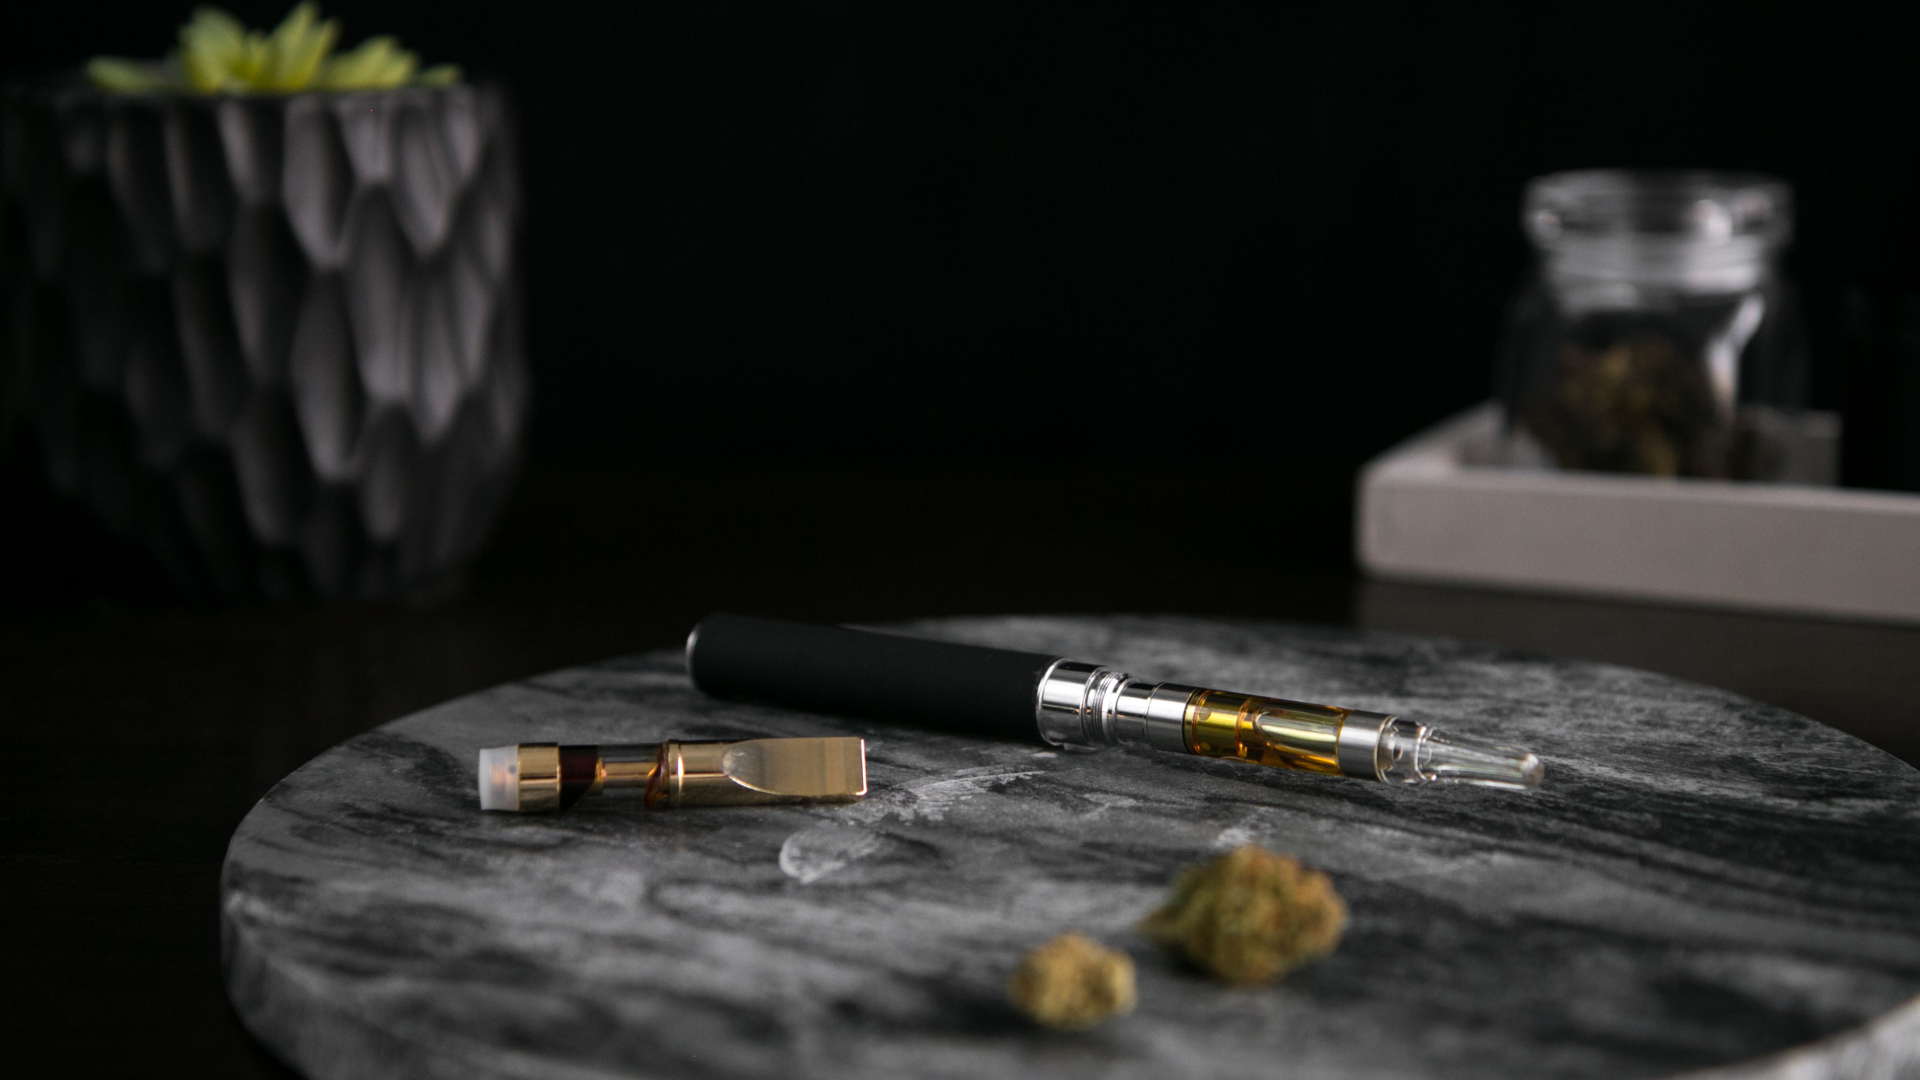 cannabis vape pen laying on a table with a marijuana pod